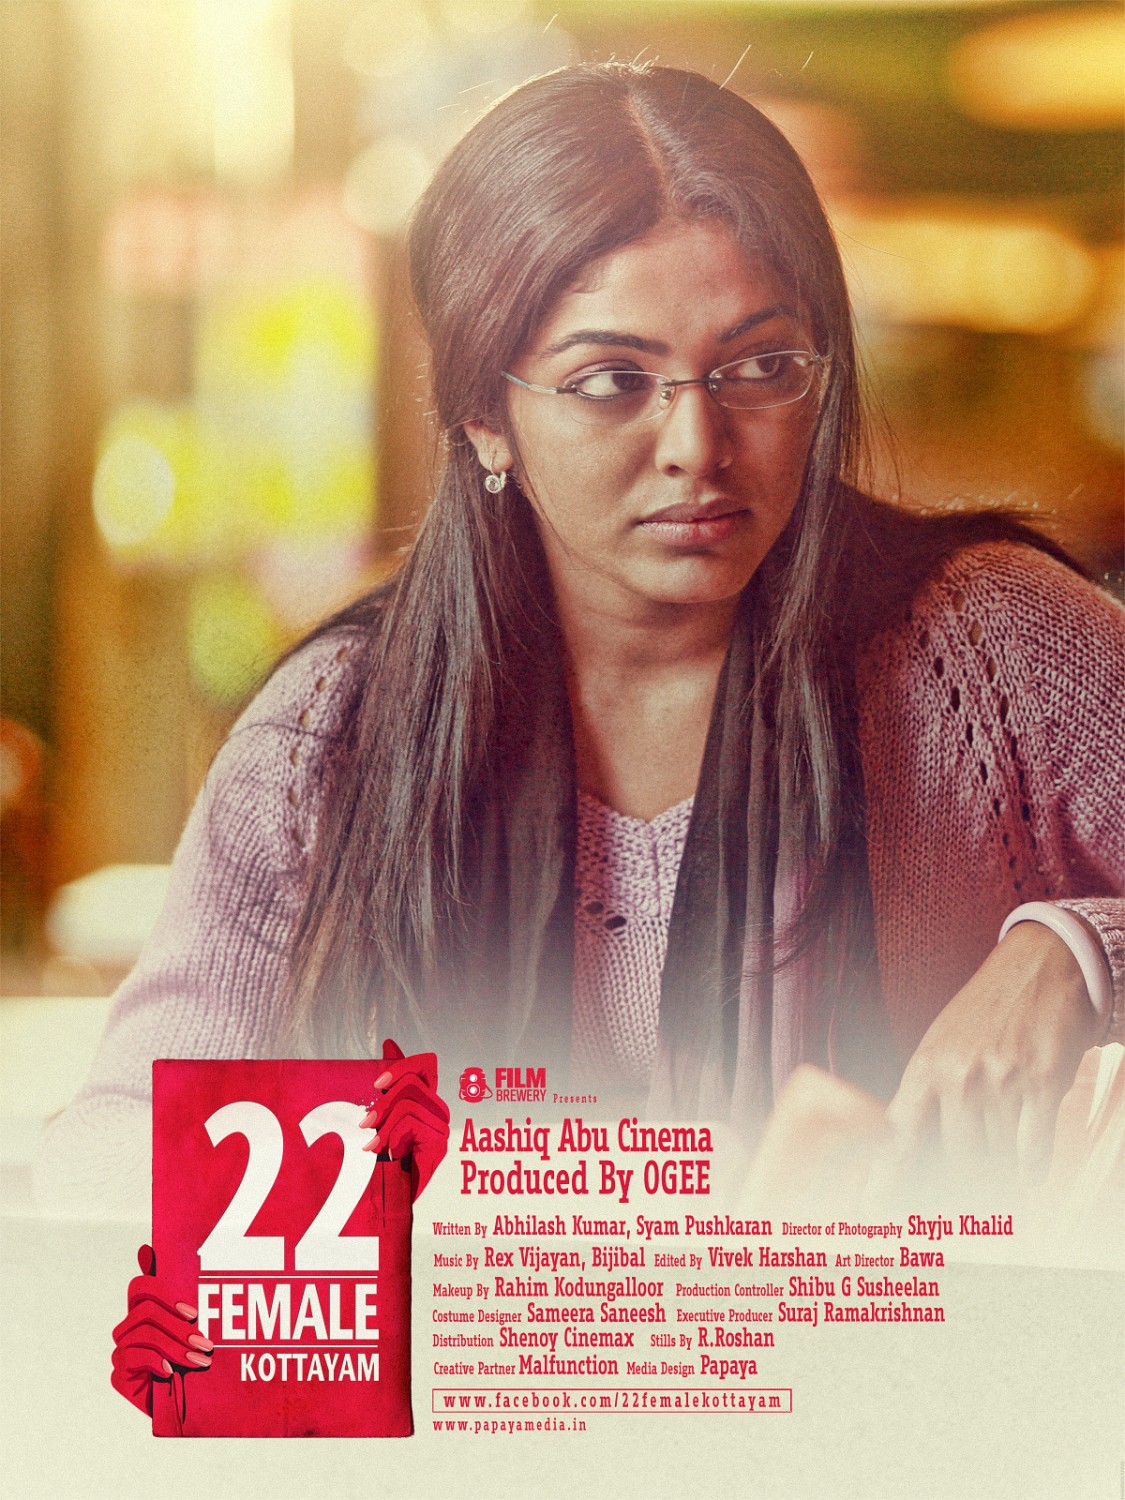 Extra Large Movie Poster Image for 22 Female Kottayam (#17 of 28)